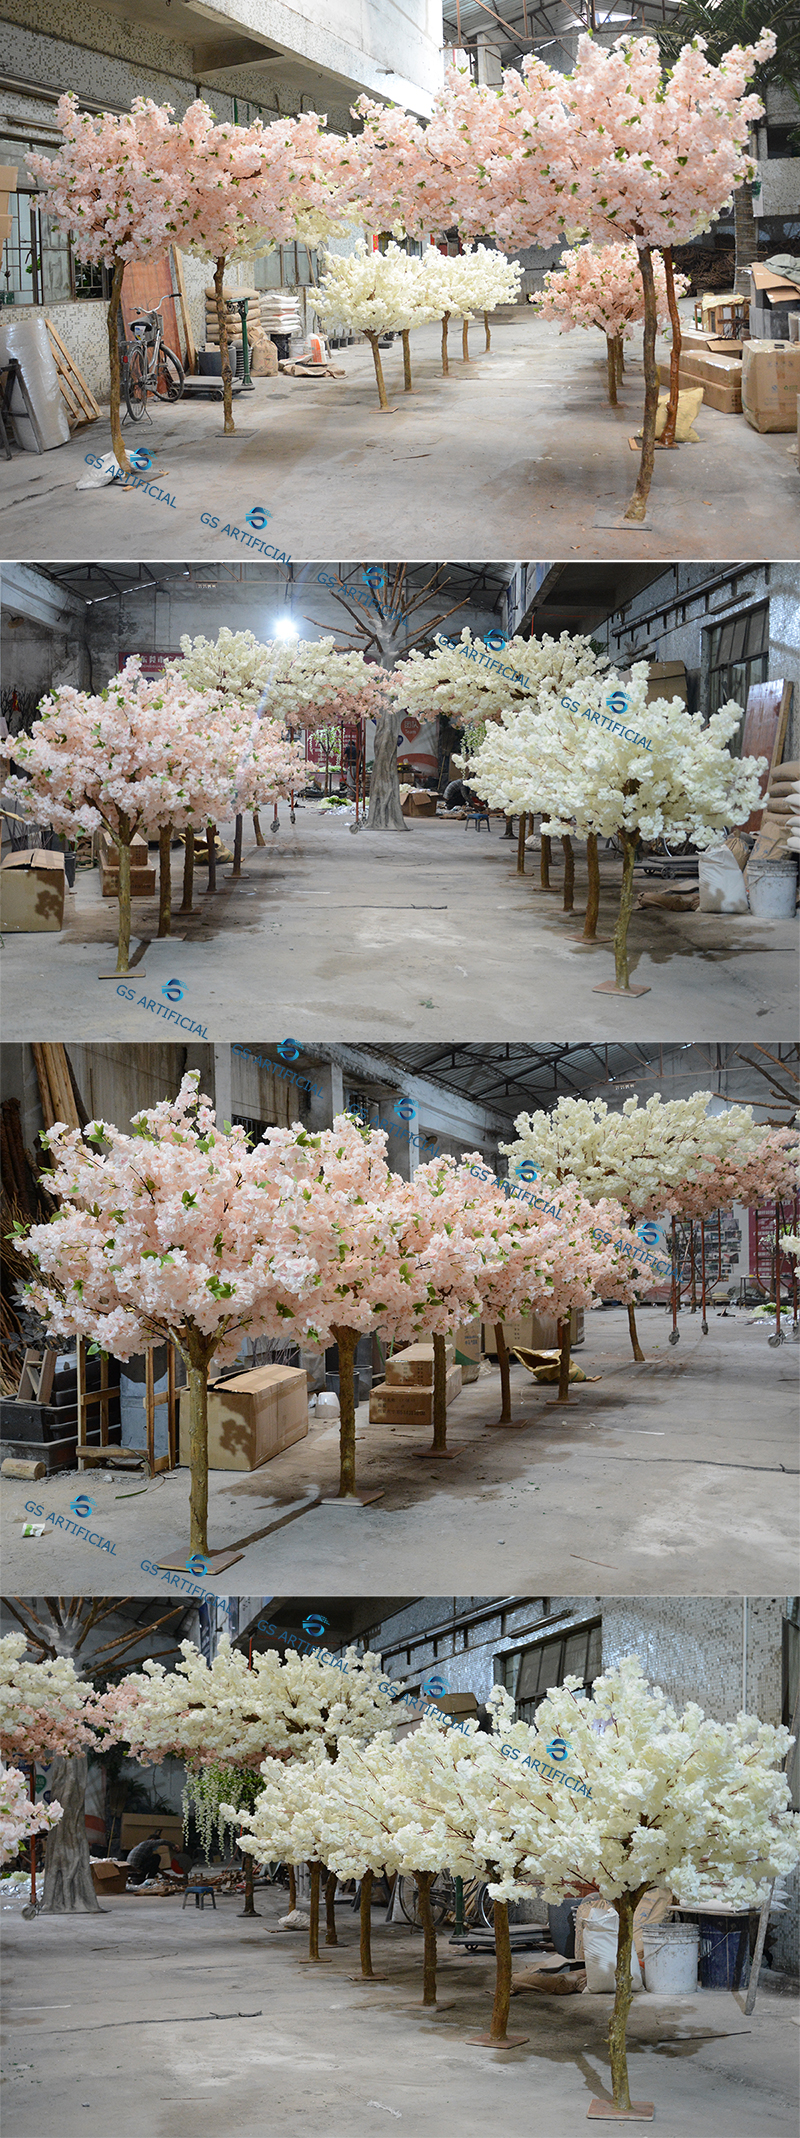  Pemë artificiale me lule qershie për dasmë 